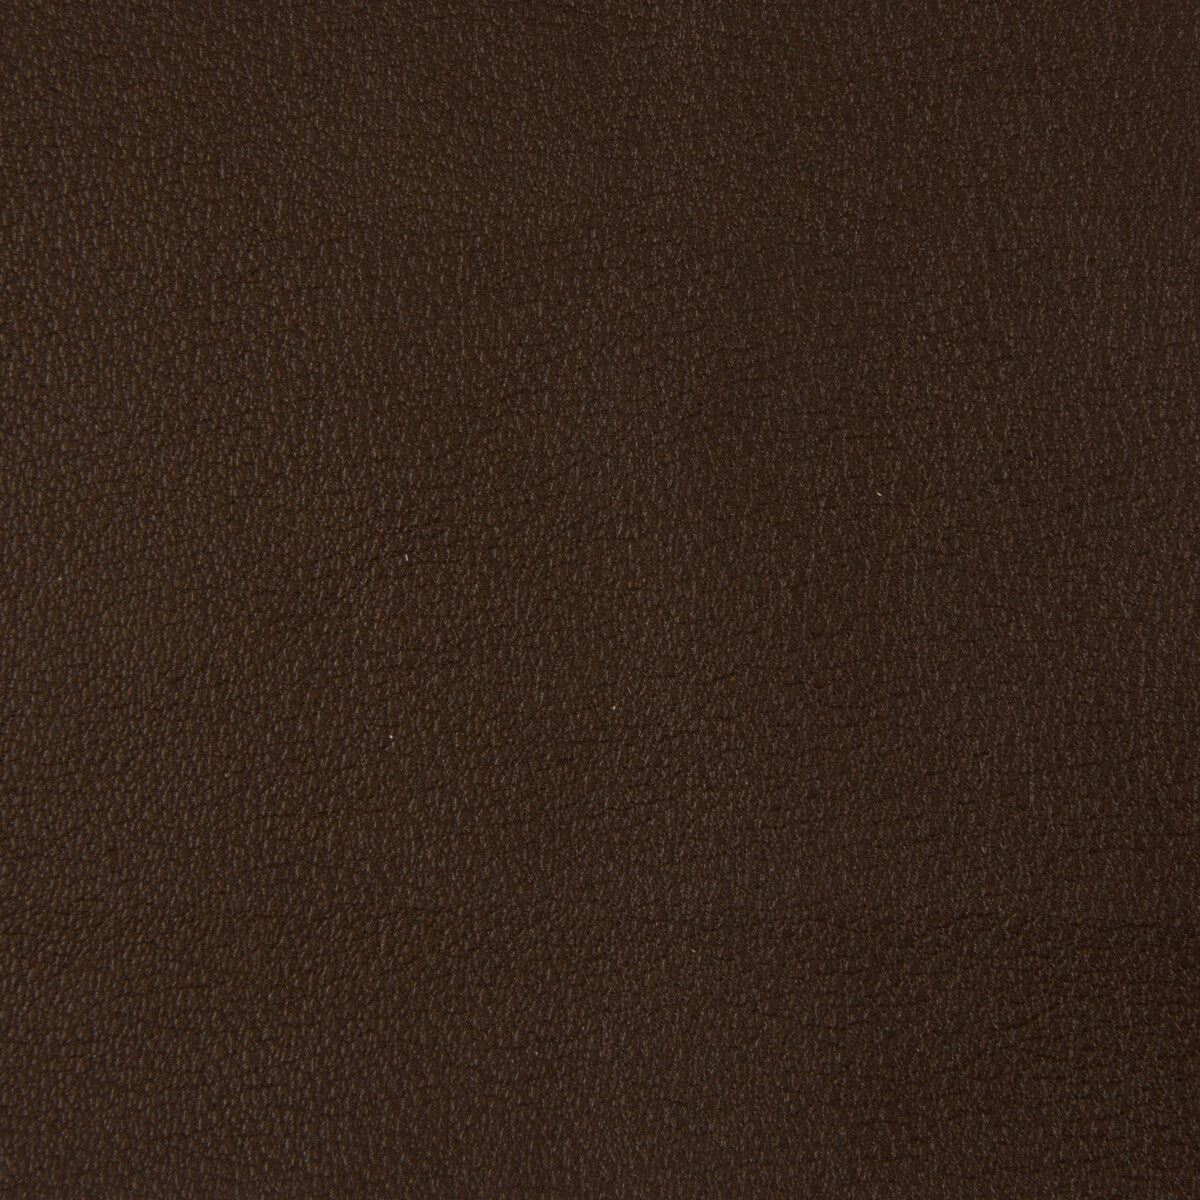 Kravet Contract fabric in berta-66 color - pattern BERTA.66.0 - by Kravet Contract